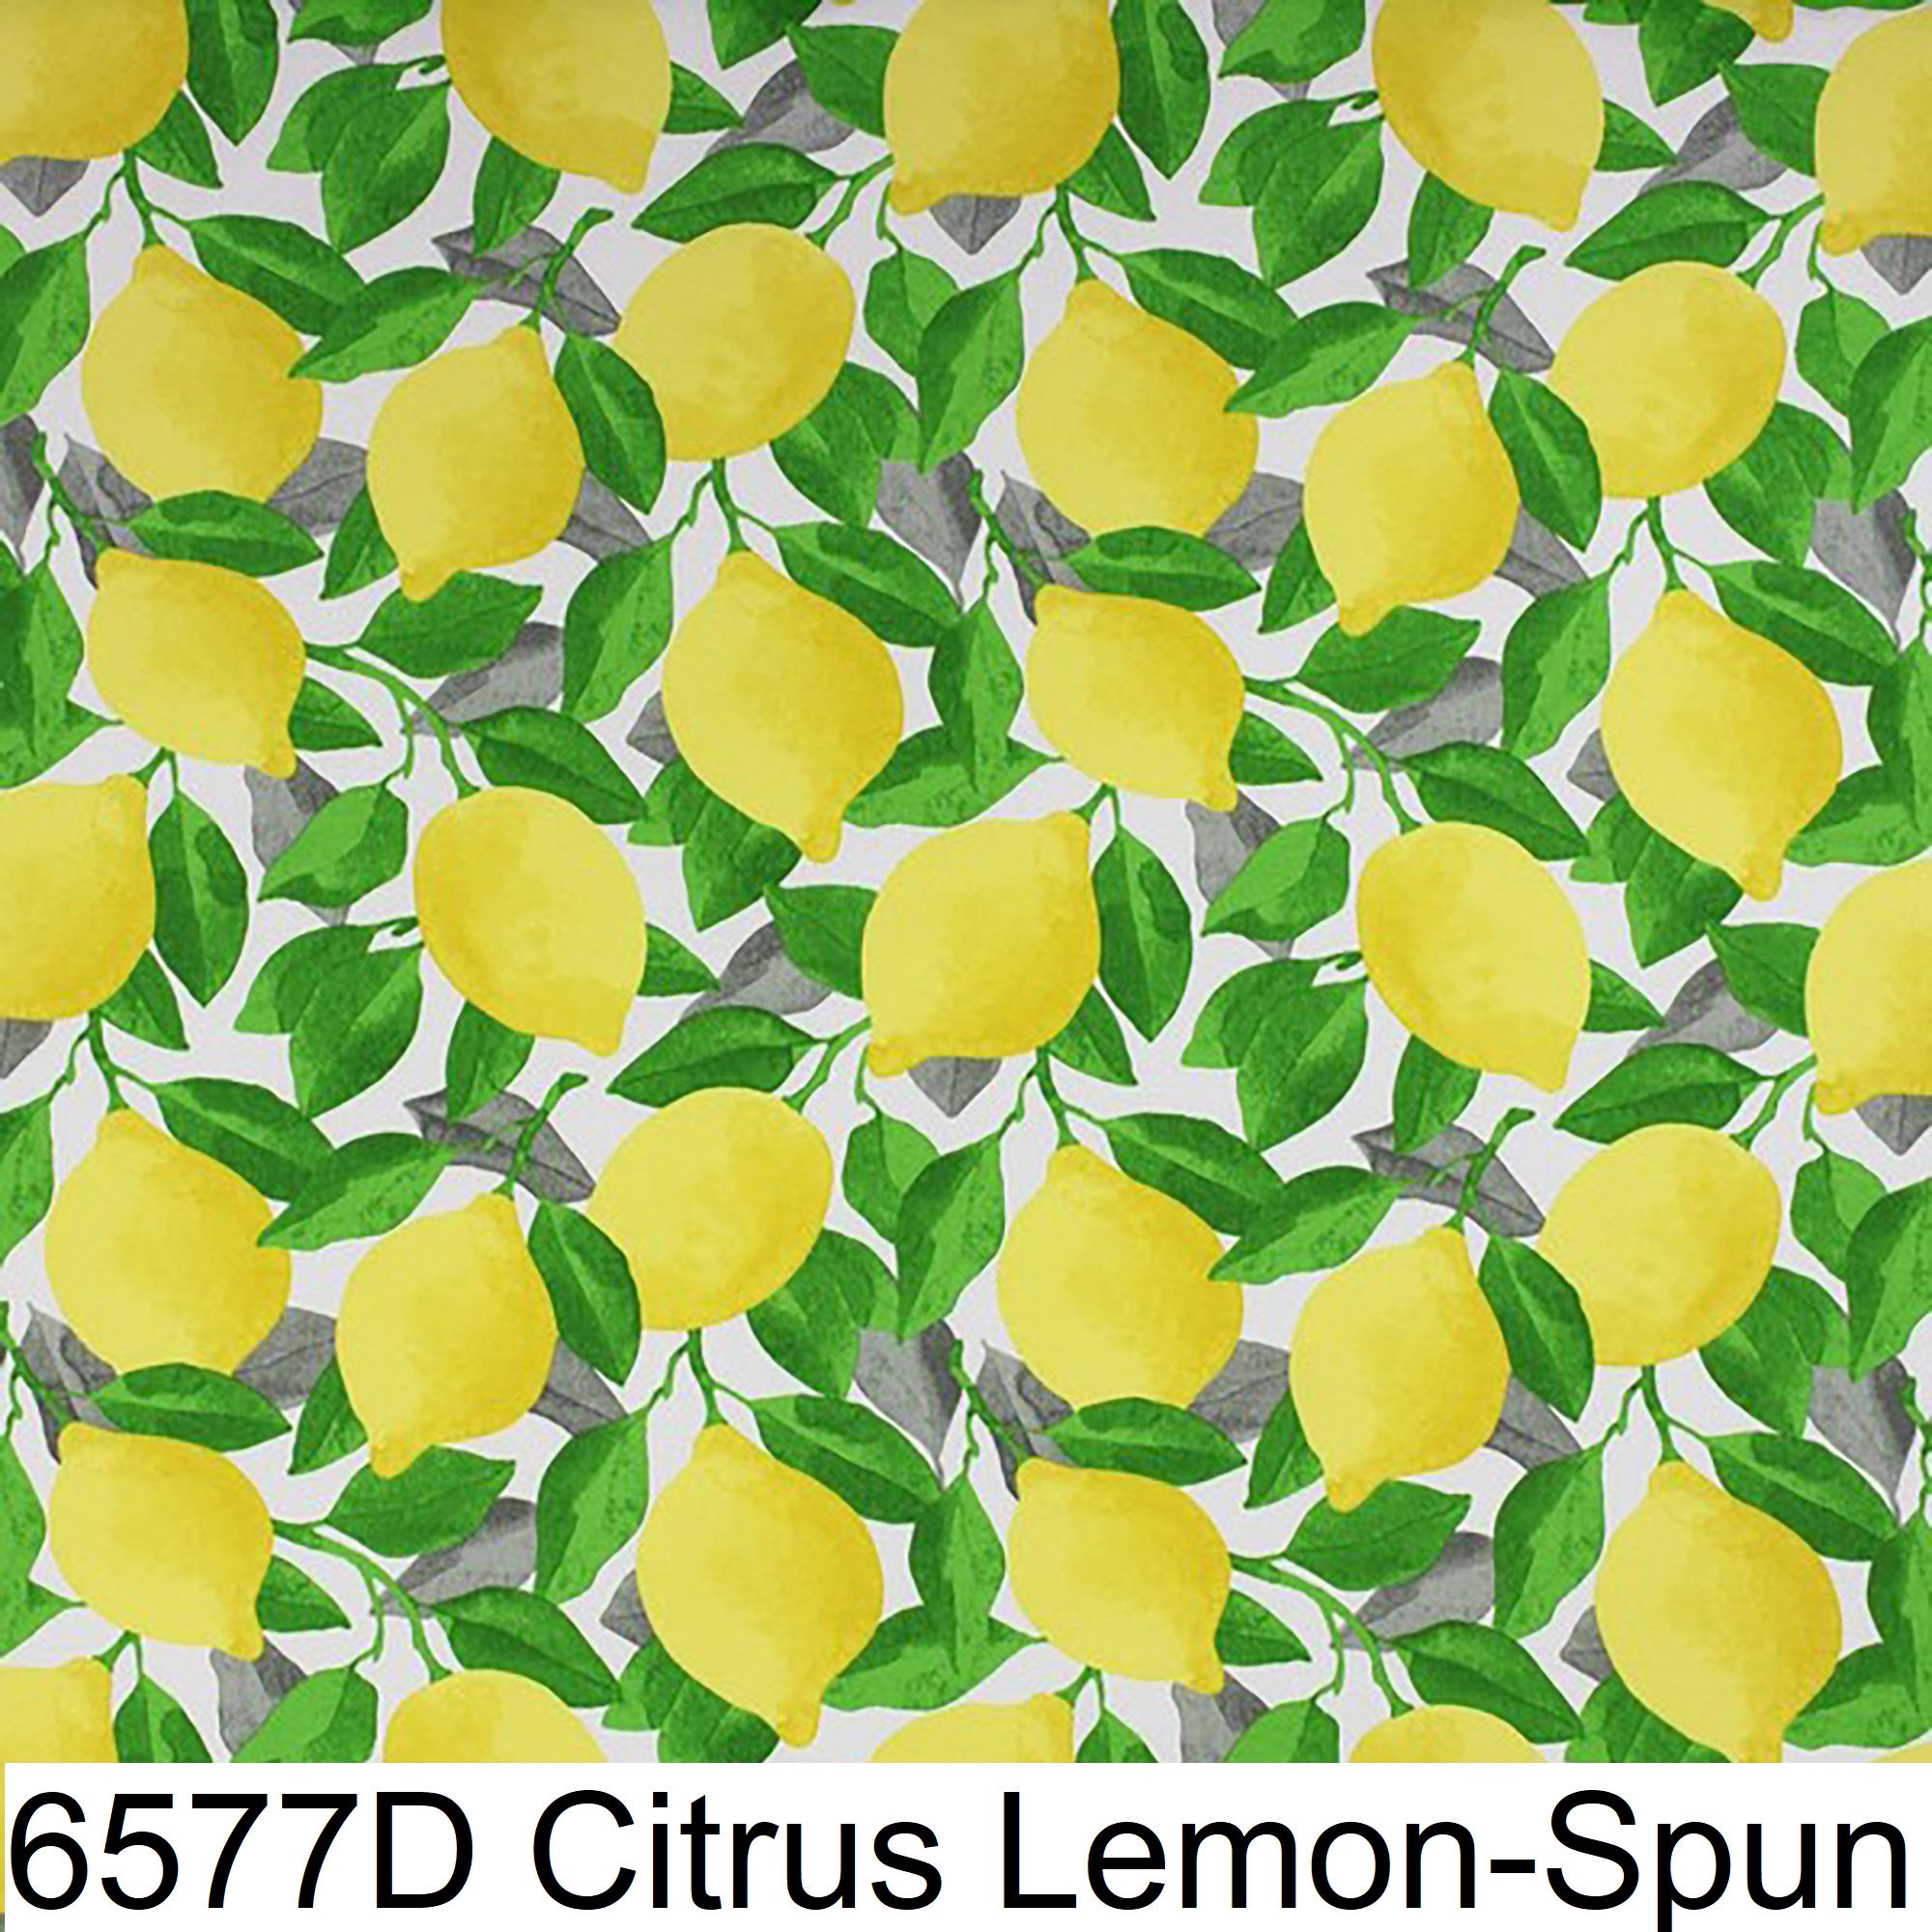 6577D Citrus Lemon-Spun